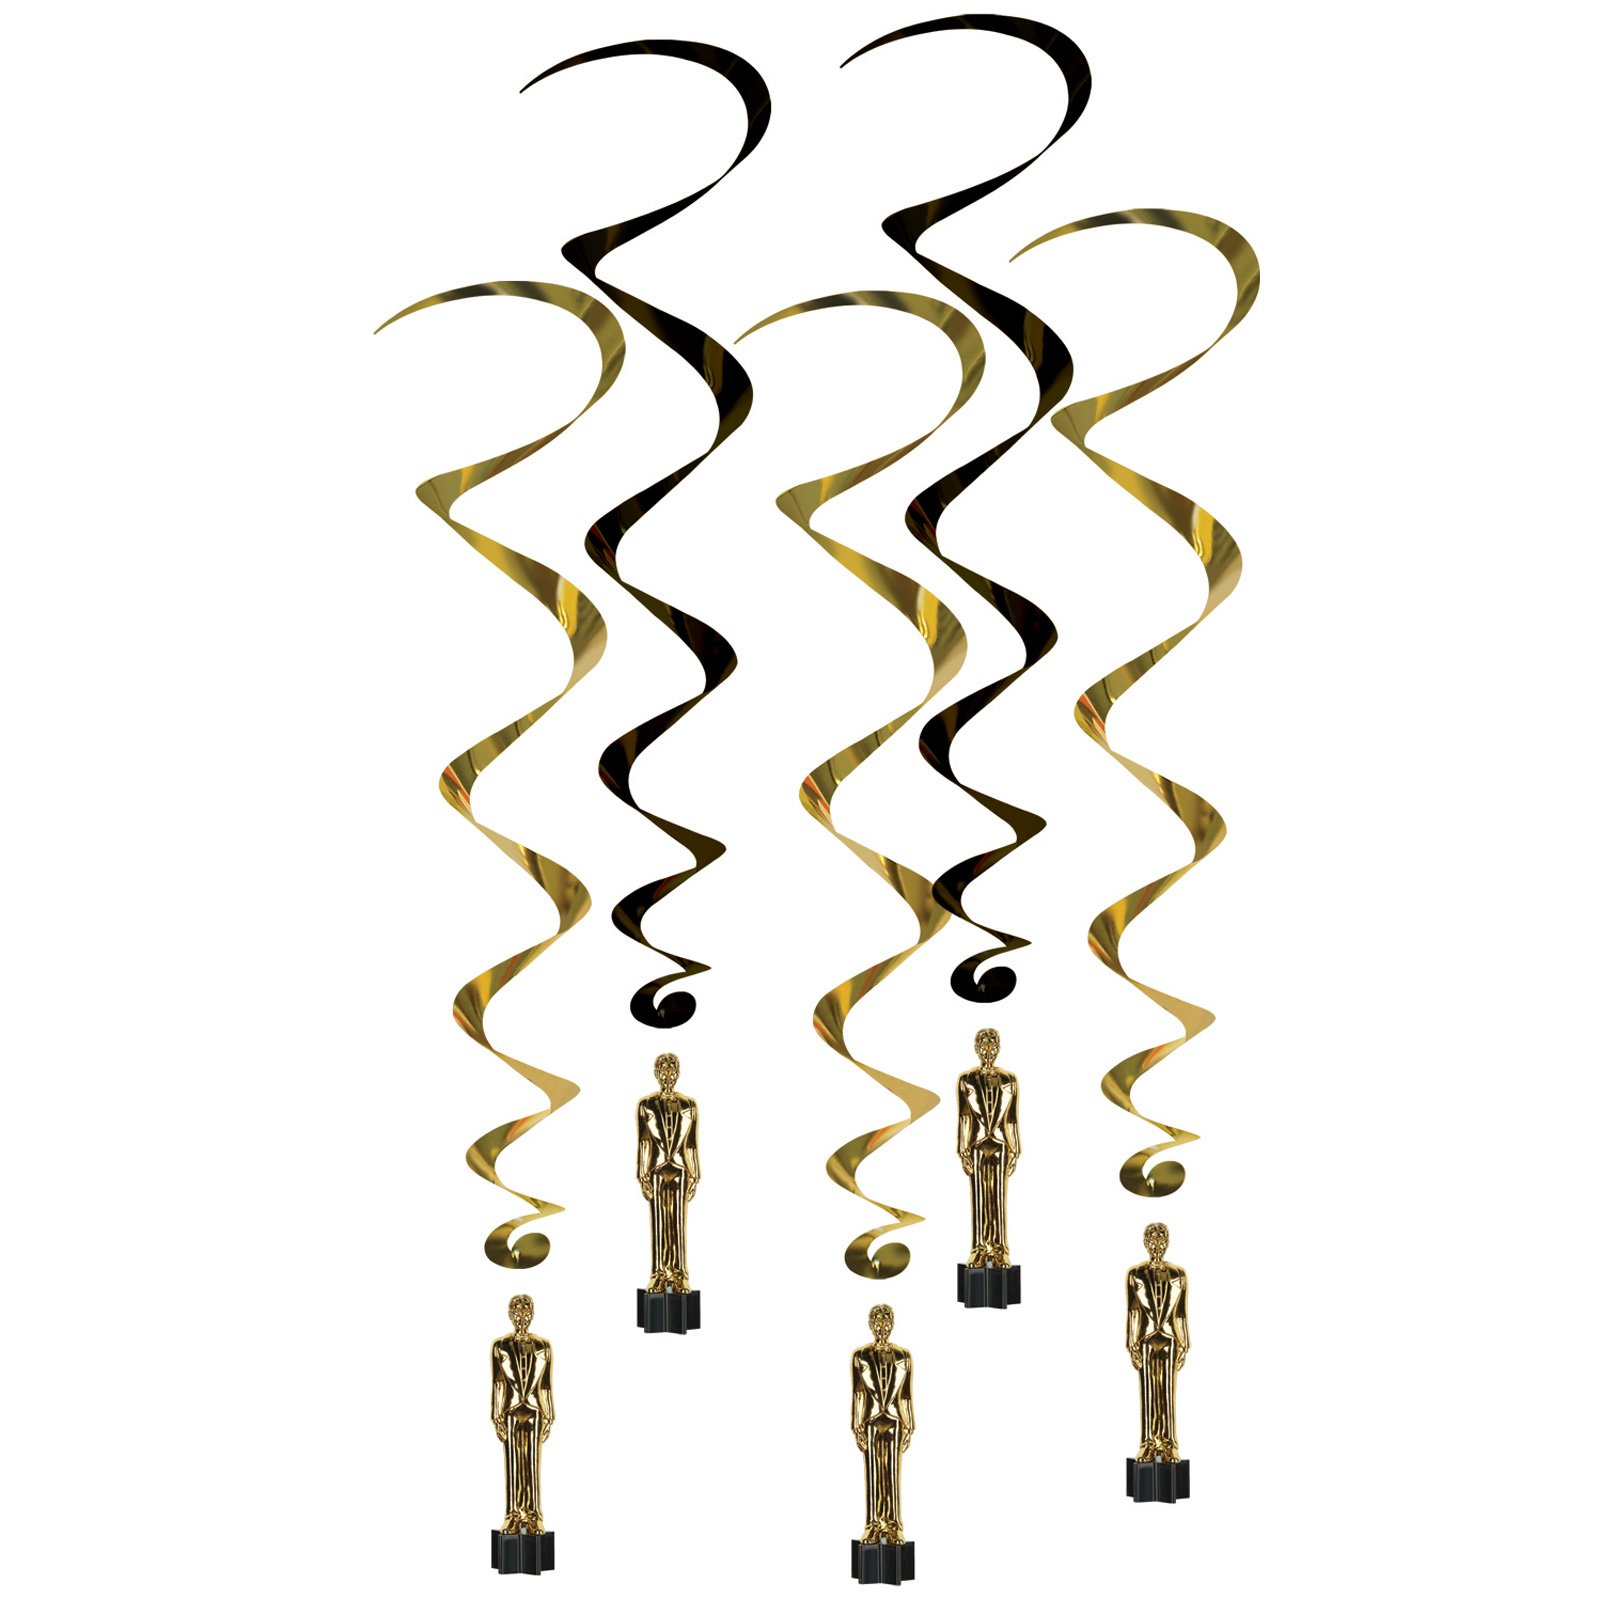 Awards Night Swirls (5 count)